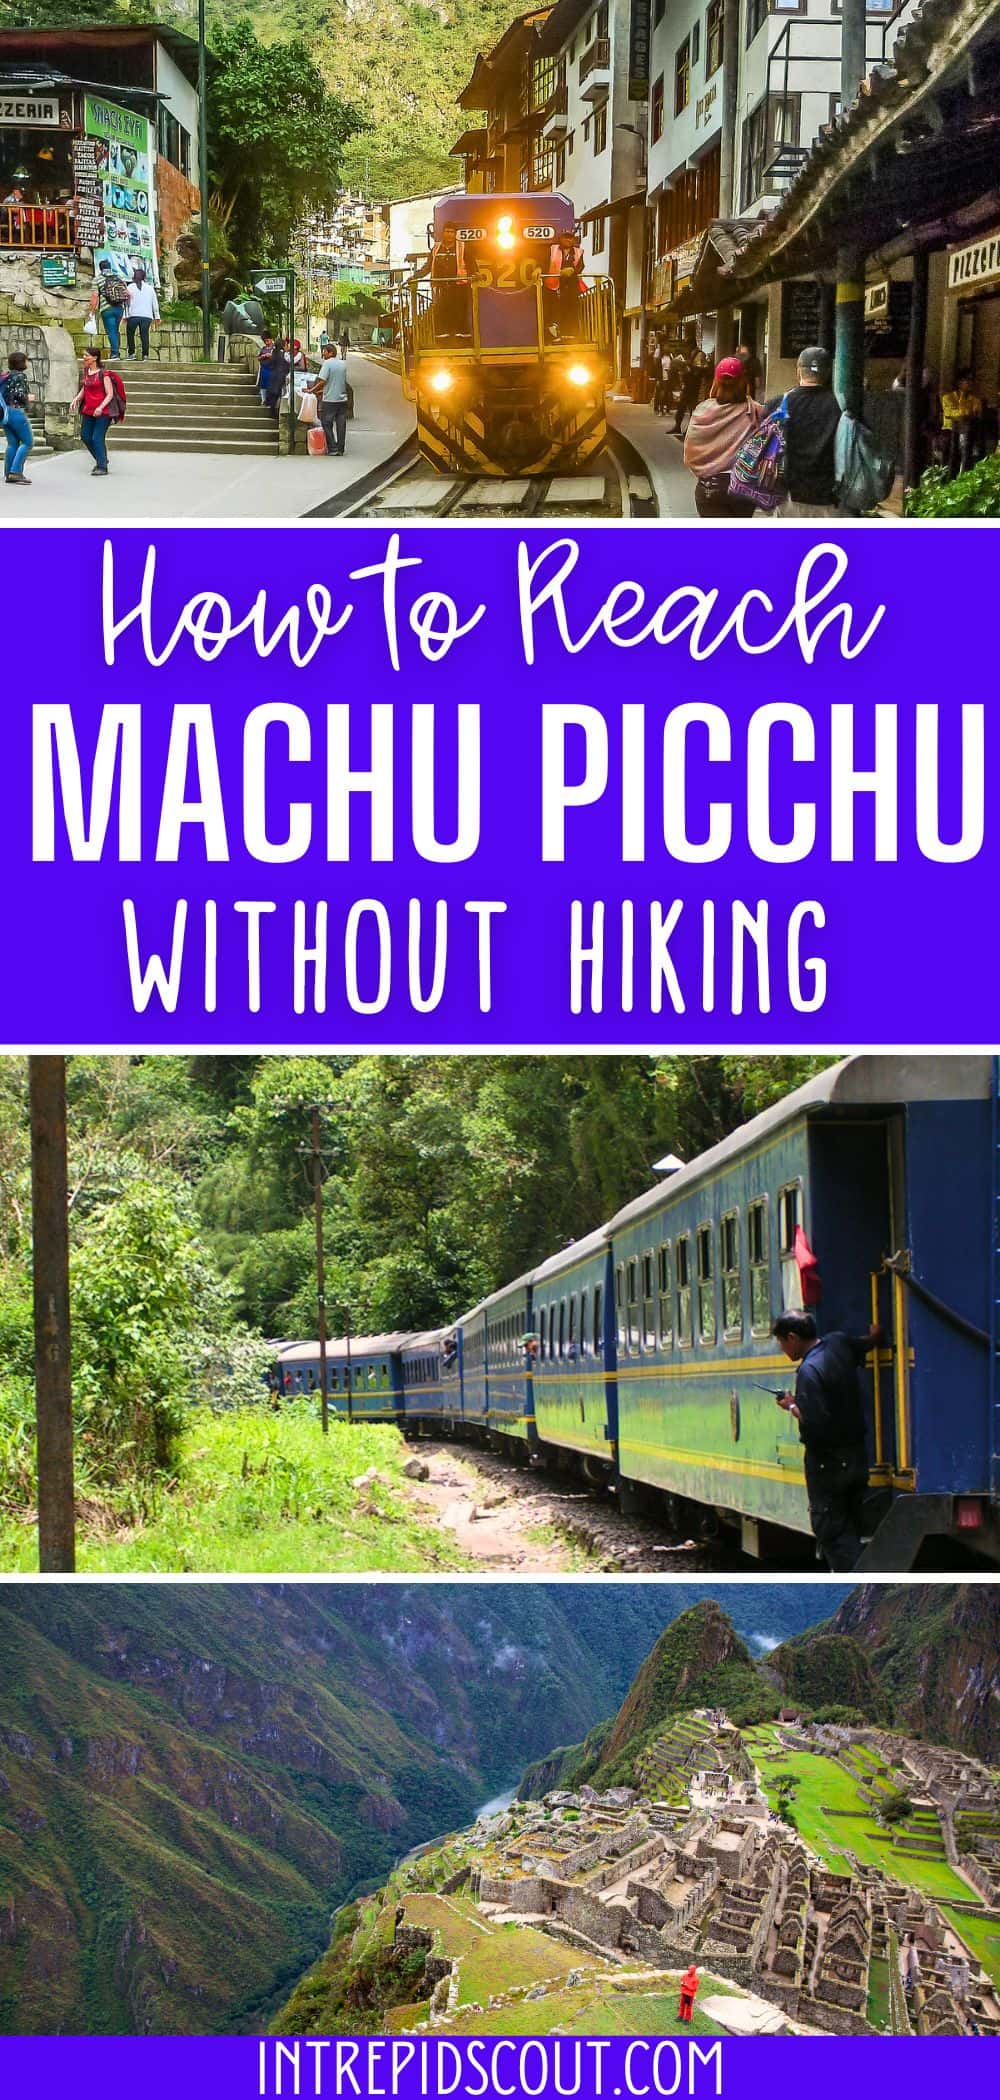 How to Reach Machu Picchu Without Hiking